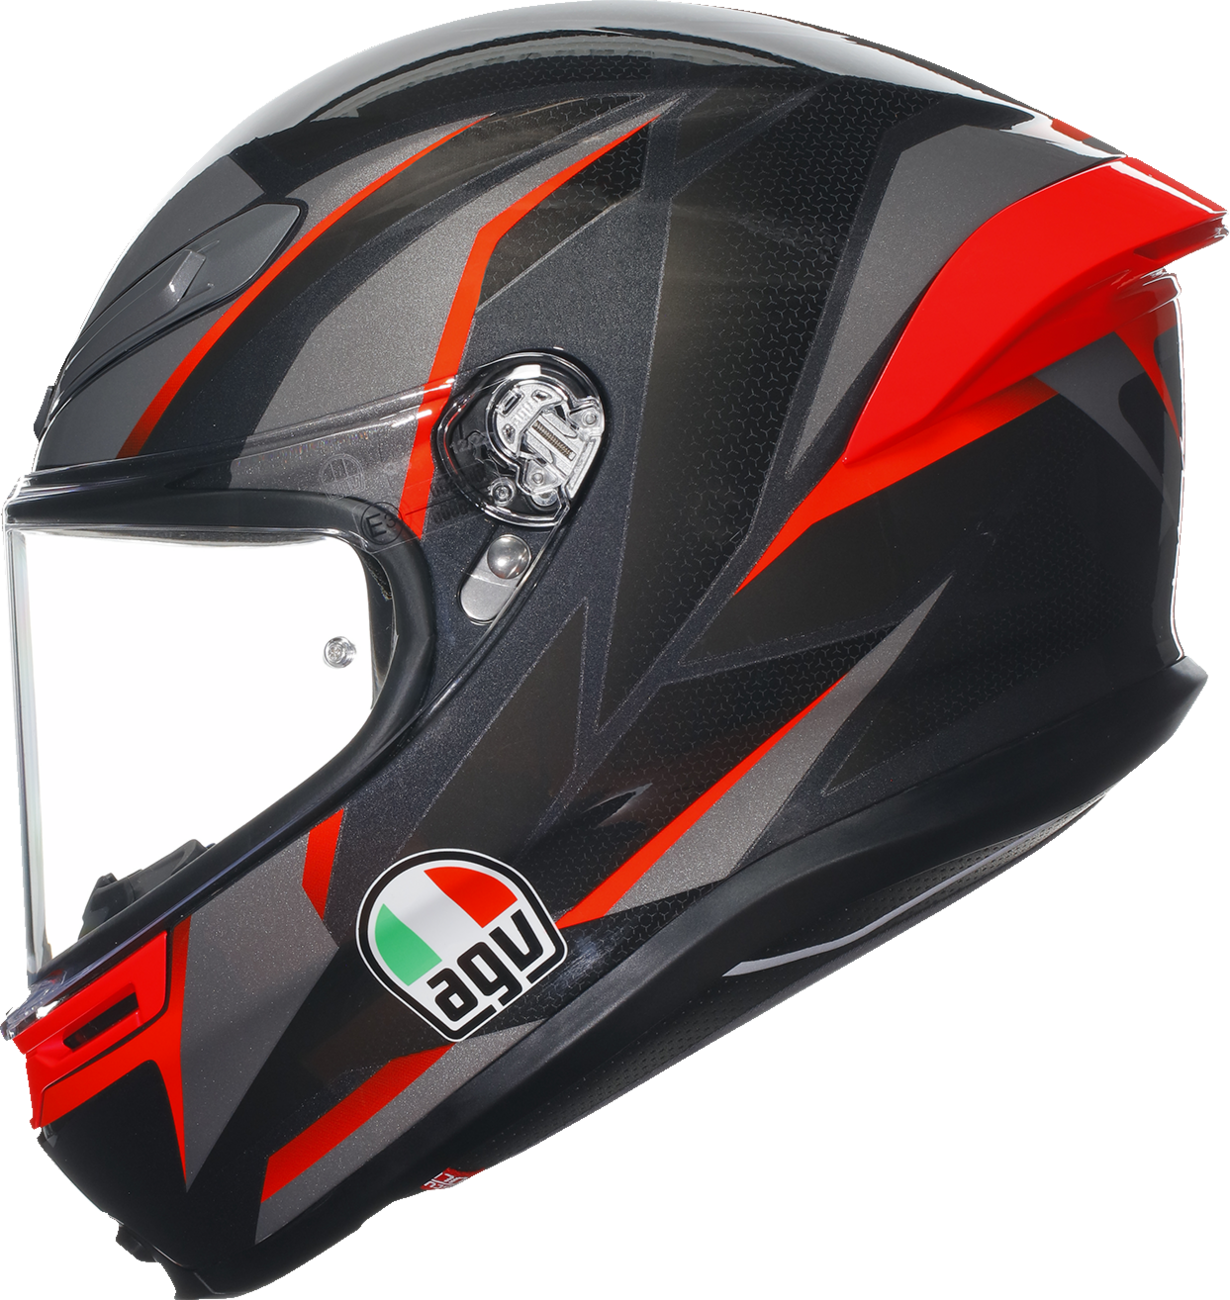 AGV K6 S Helmet - Slashcut - Black/Gray/Red - Large 2118395002014L